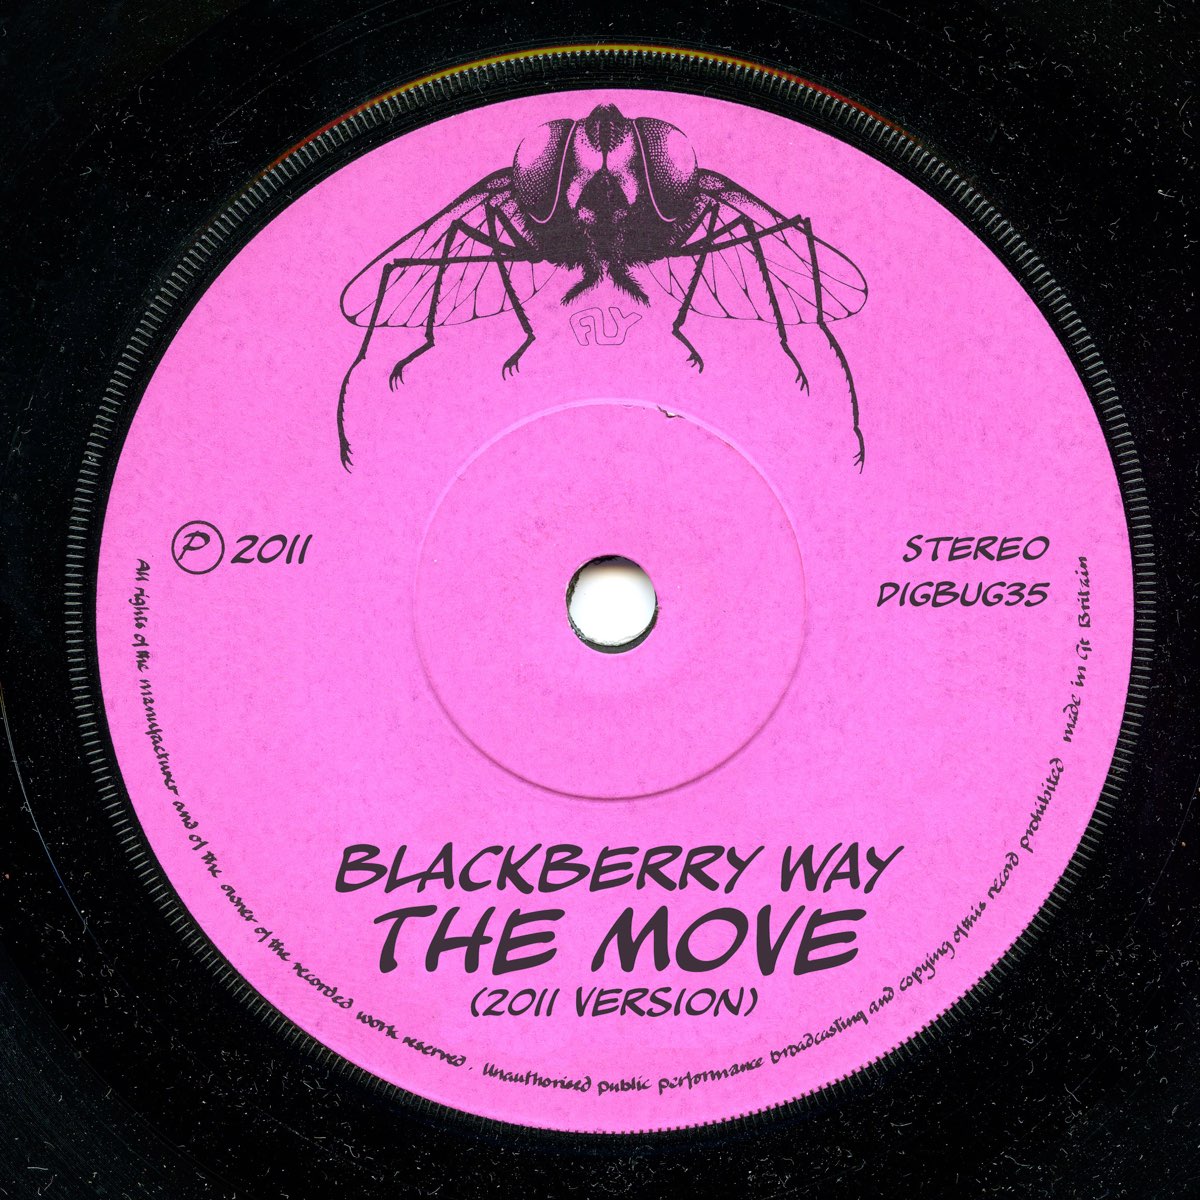 Move BLACKBERRY way. Move. Блэкберри песня альбом. On the move. Blackberry песня